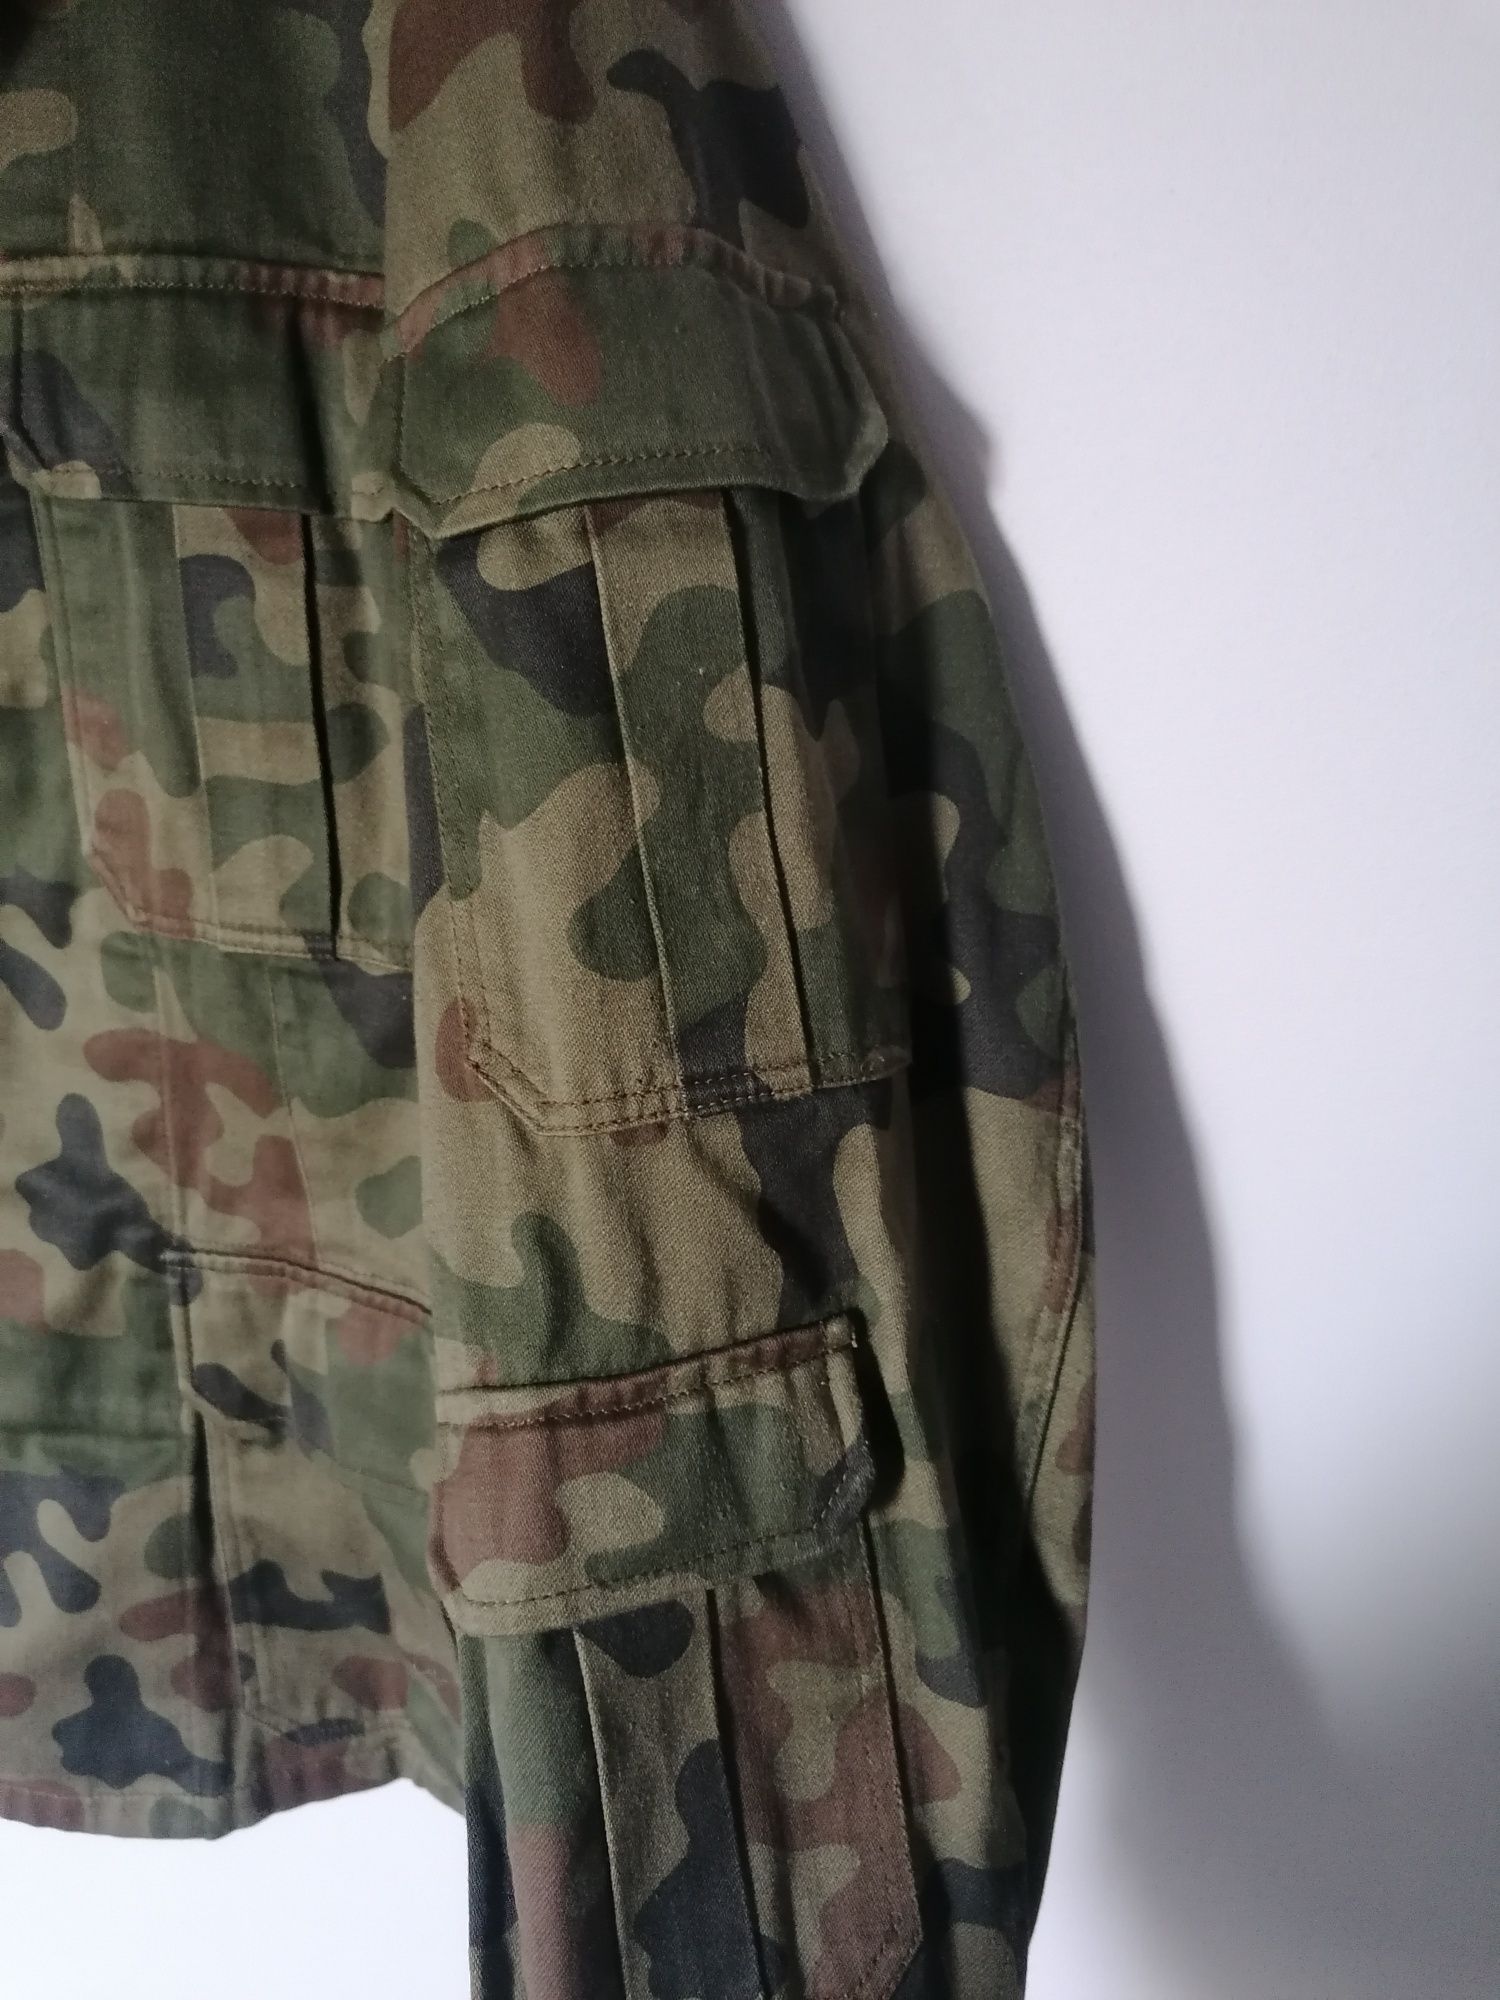 Bluza kurtka polowa mundur wz 93 127 MON